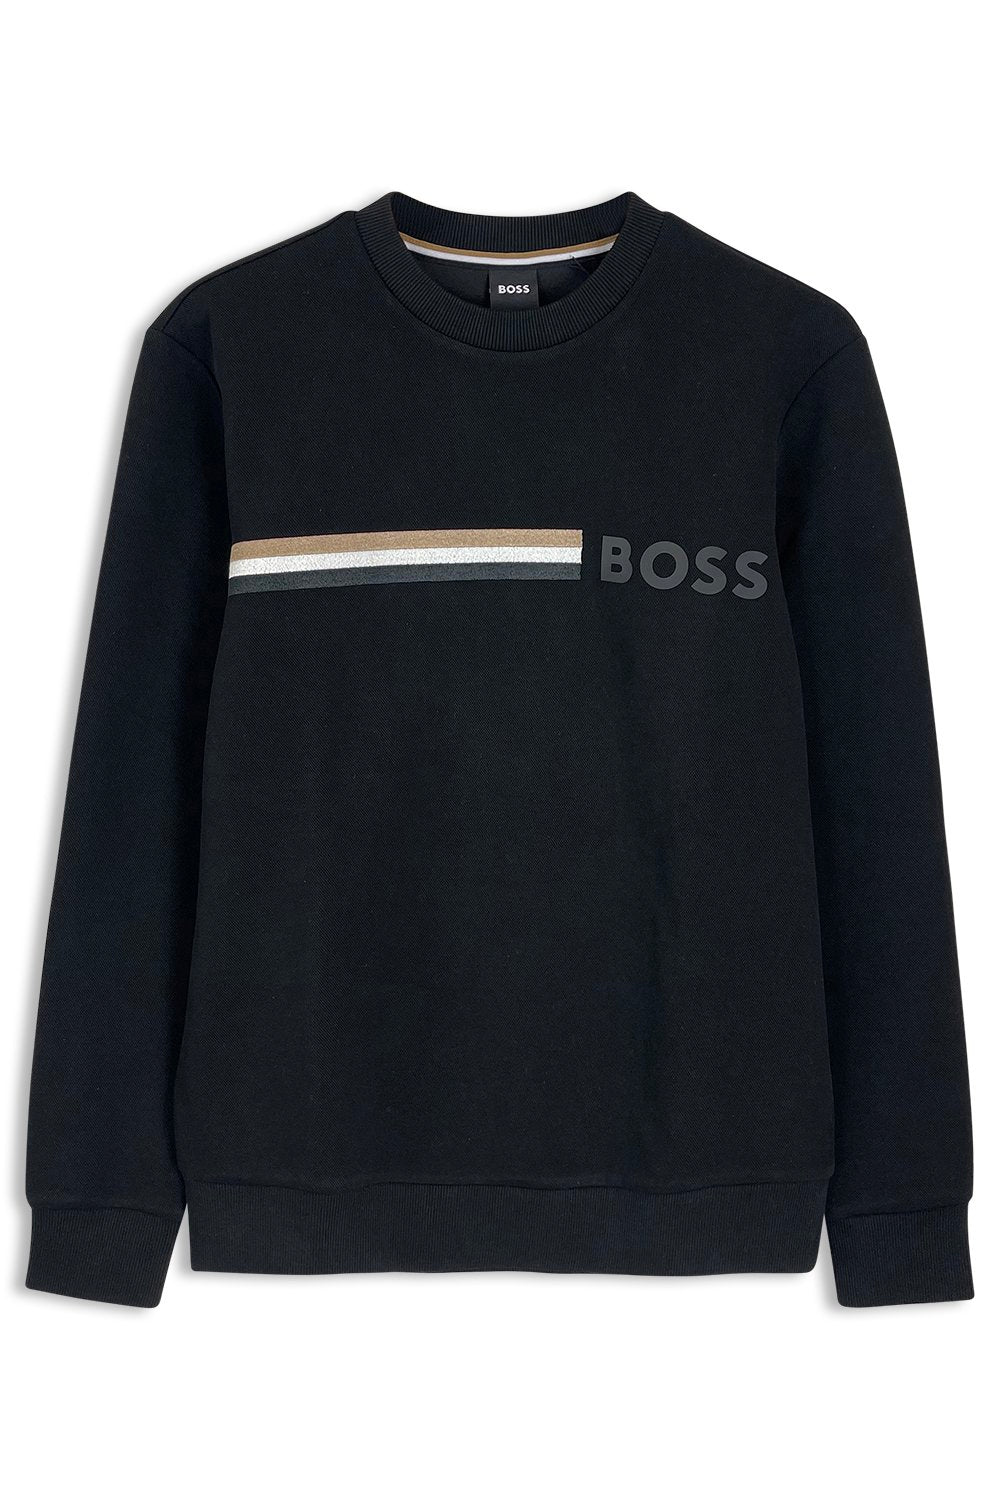 Men's Black Hugo Boss Sadler Sweatshirt